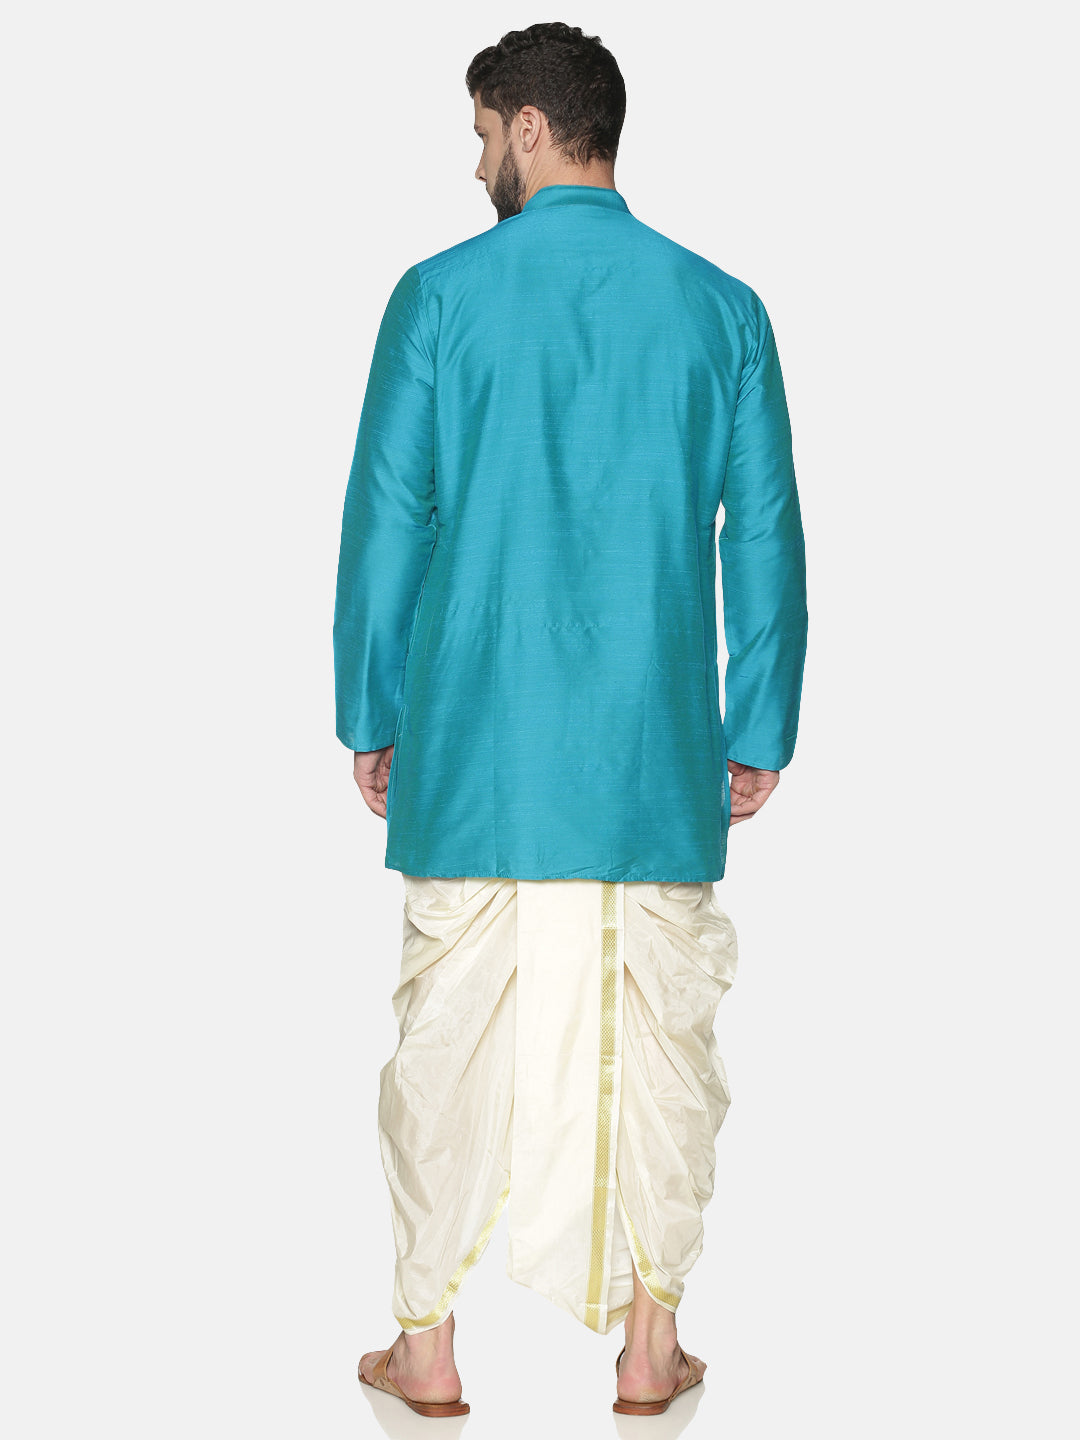 Blue Cotton Solid Kurta With Dhoti Pants